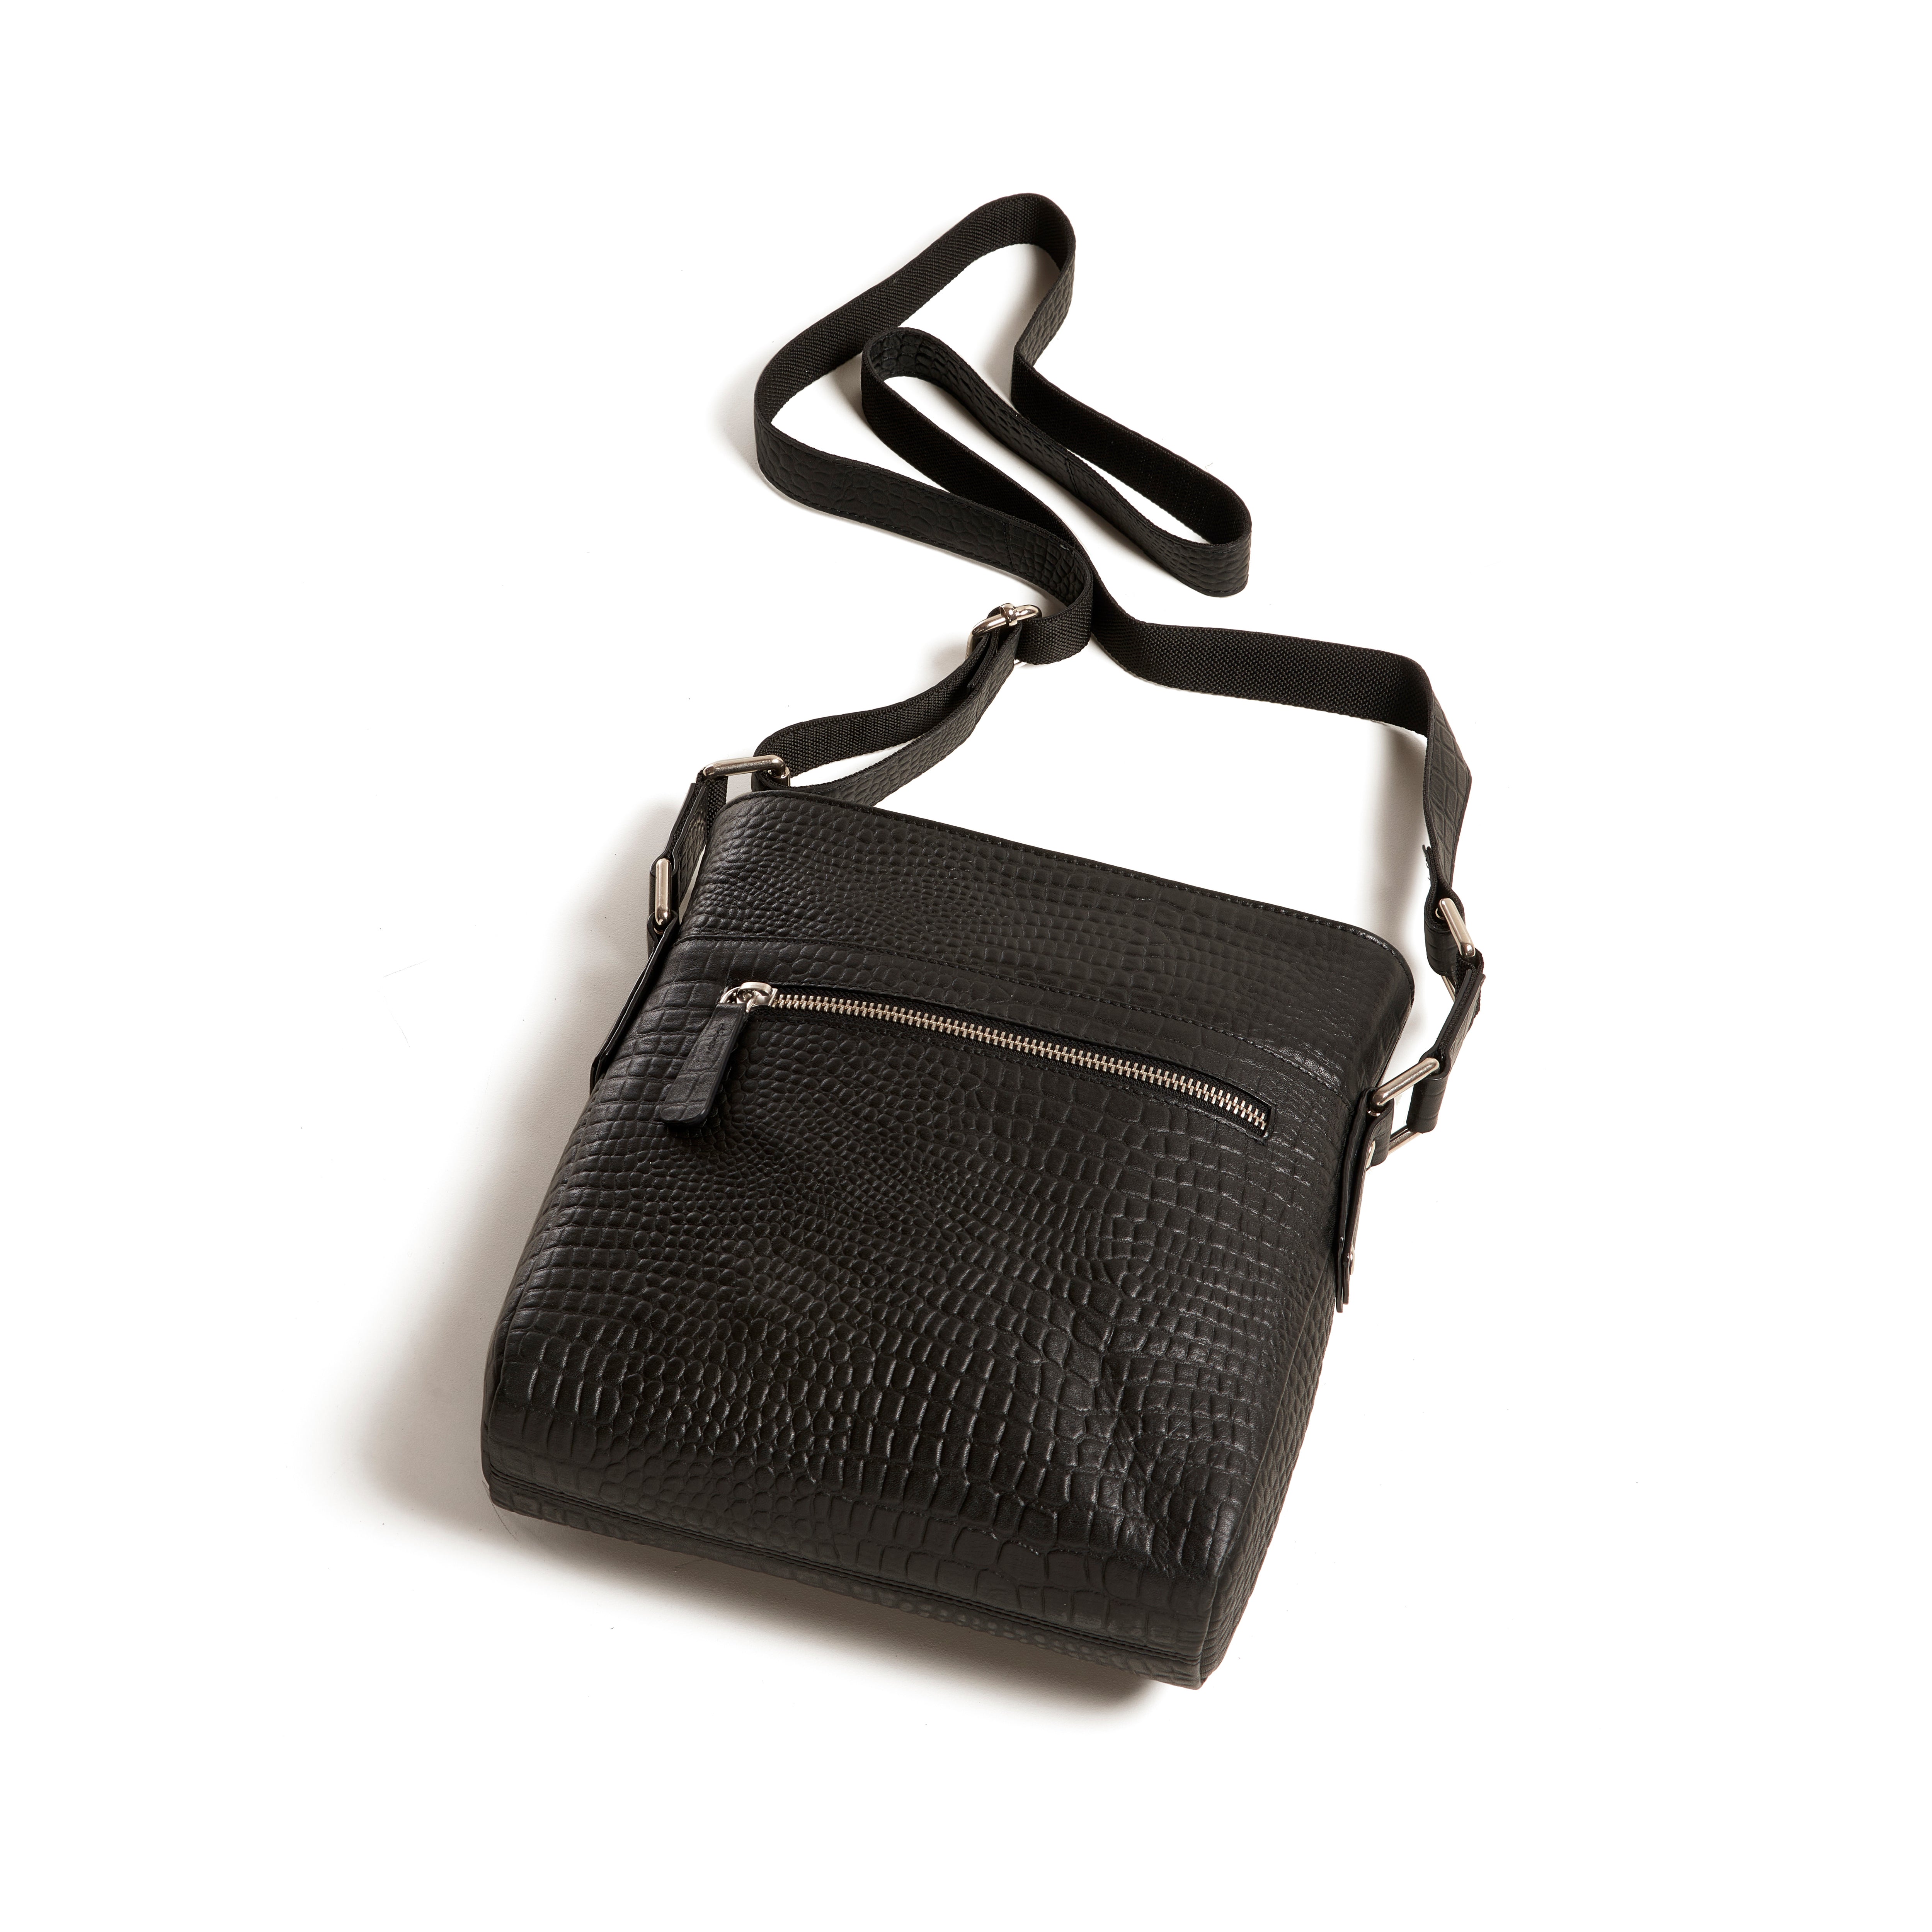 Dinero Leather Sling Bag